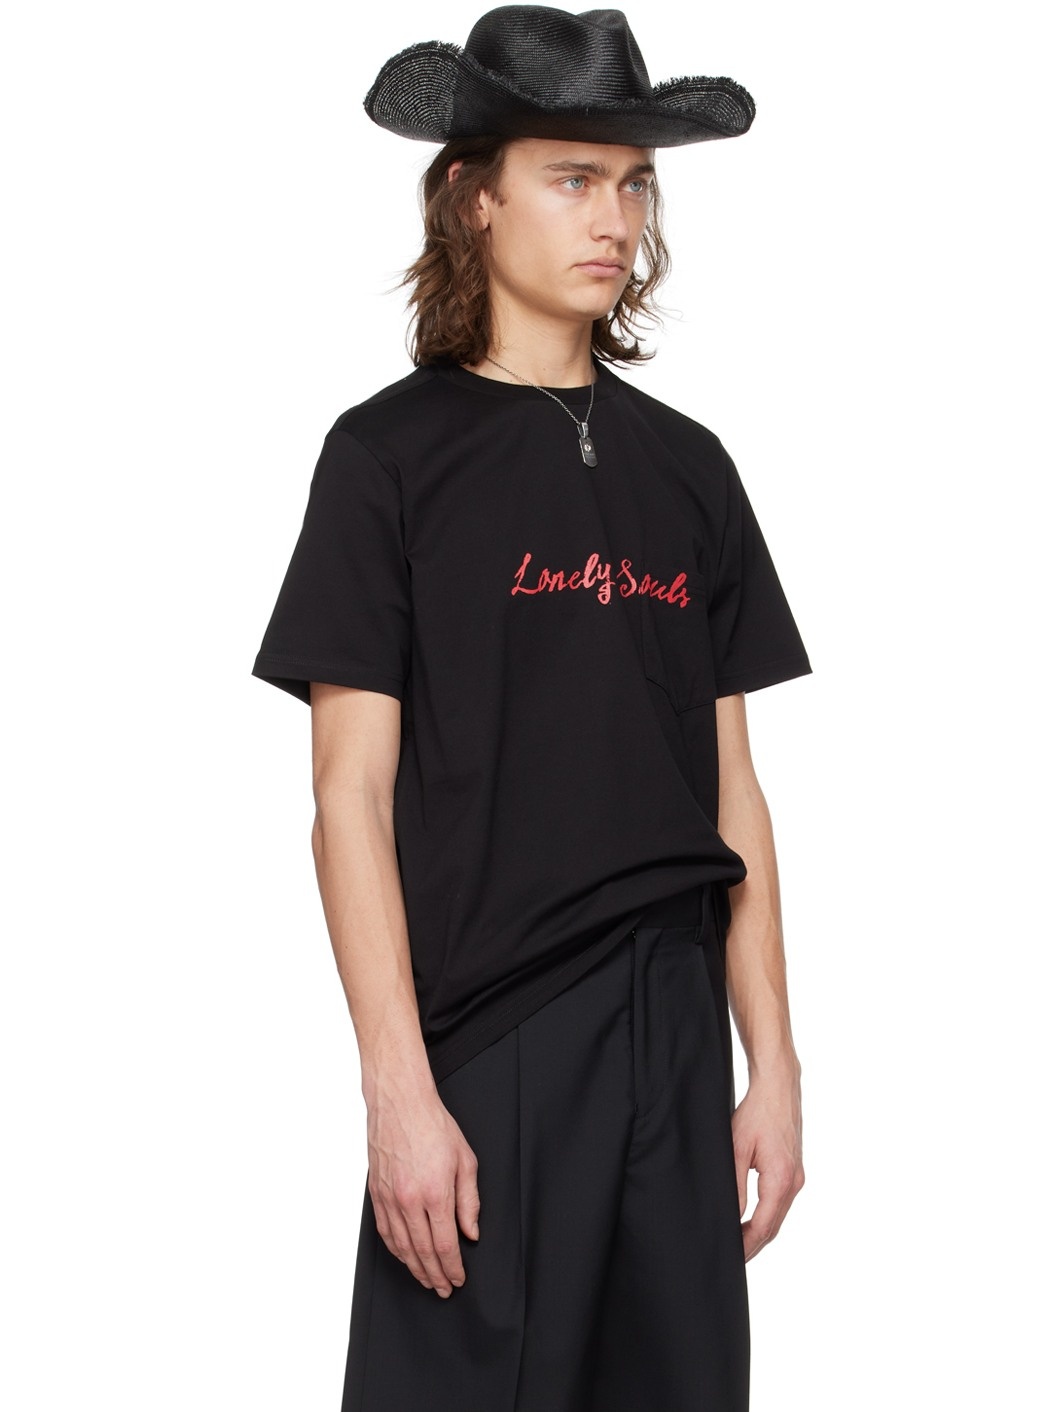 Black 'Lonely Souls' T-Shirt - 2